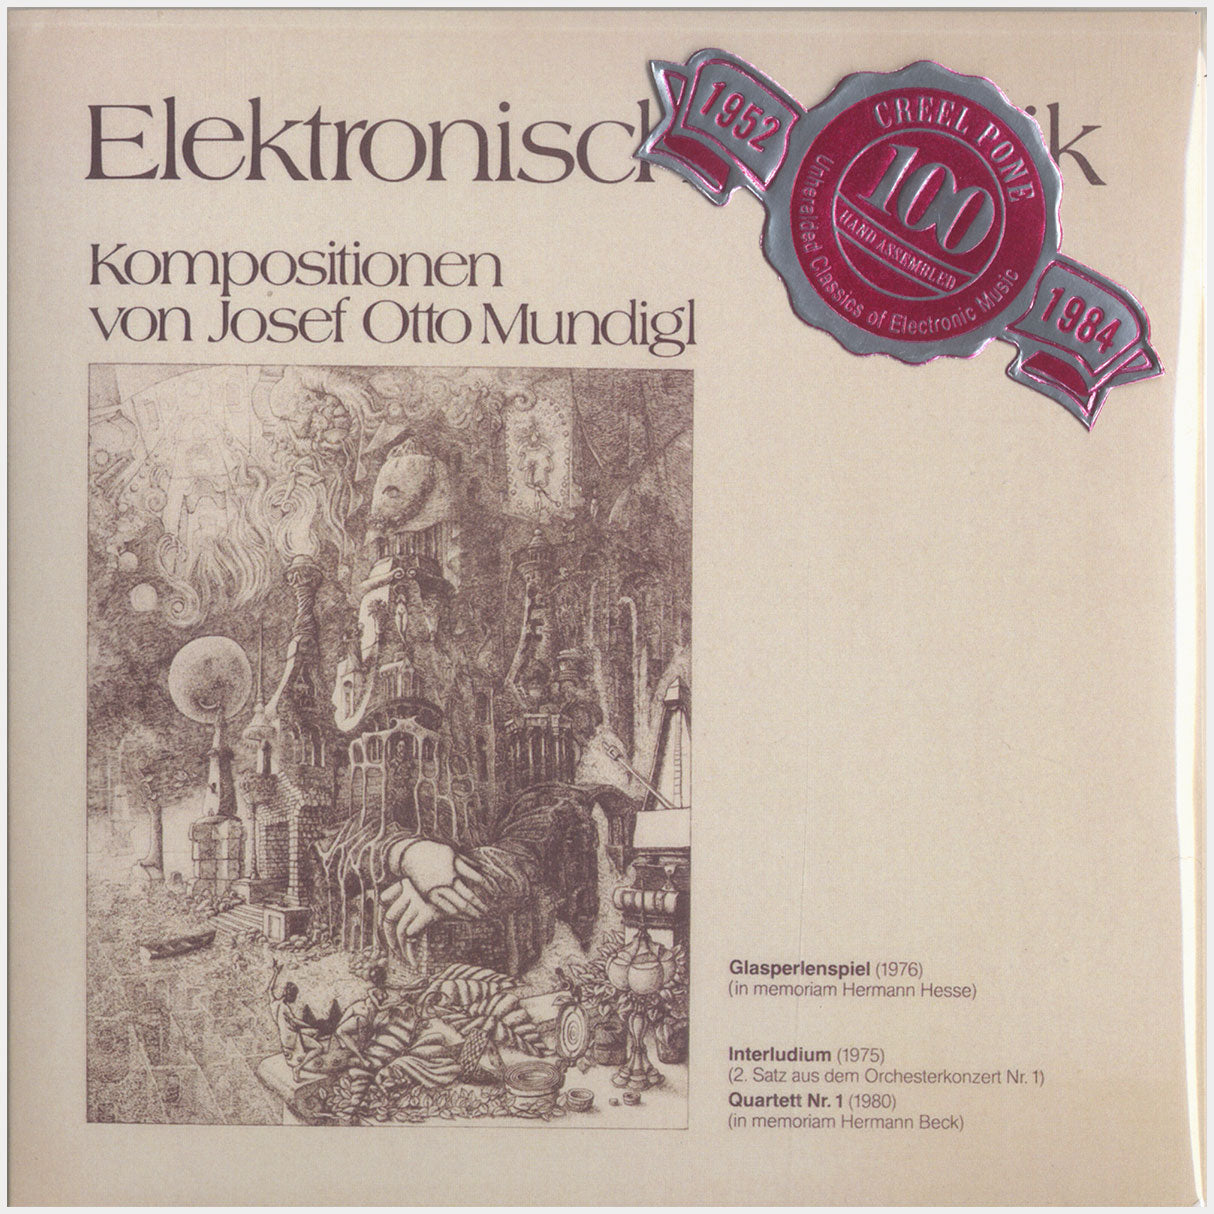 [CP 135 CD] Josef Otto Mundigl; Elektronische Musik (IMS 072), Elektronische Musik (IMS 096)